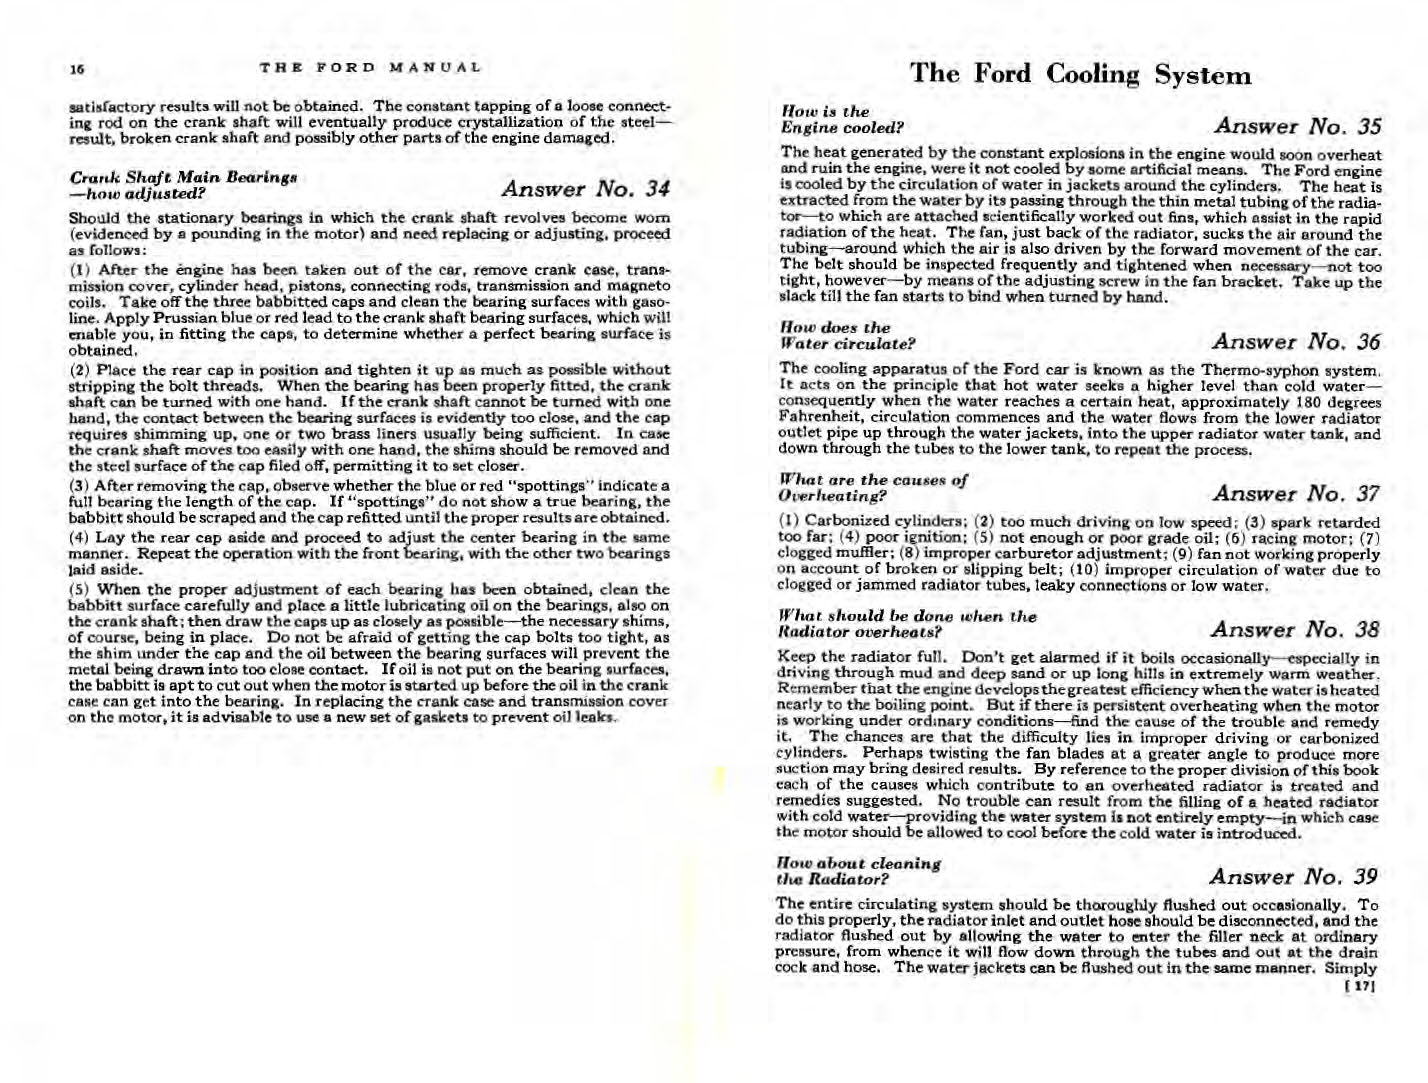 n_1922 Ford Manual-16-17.jpg